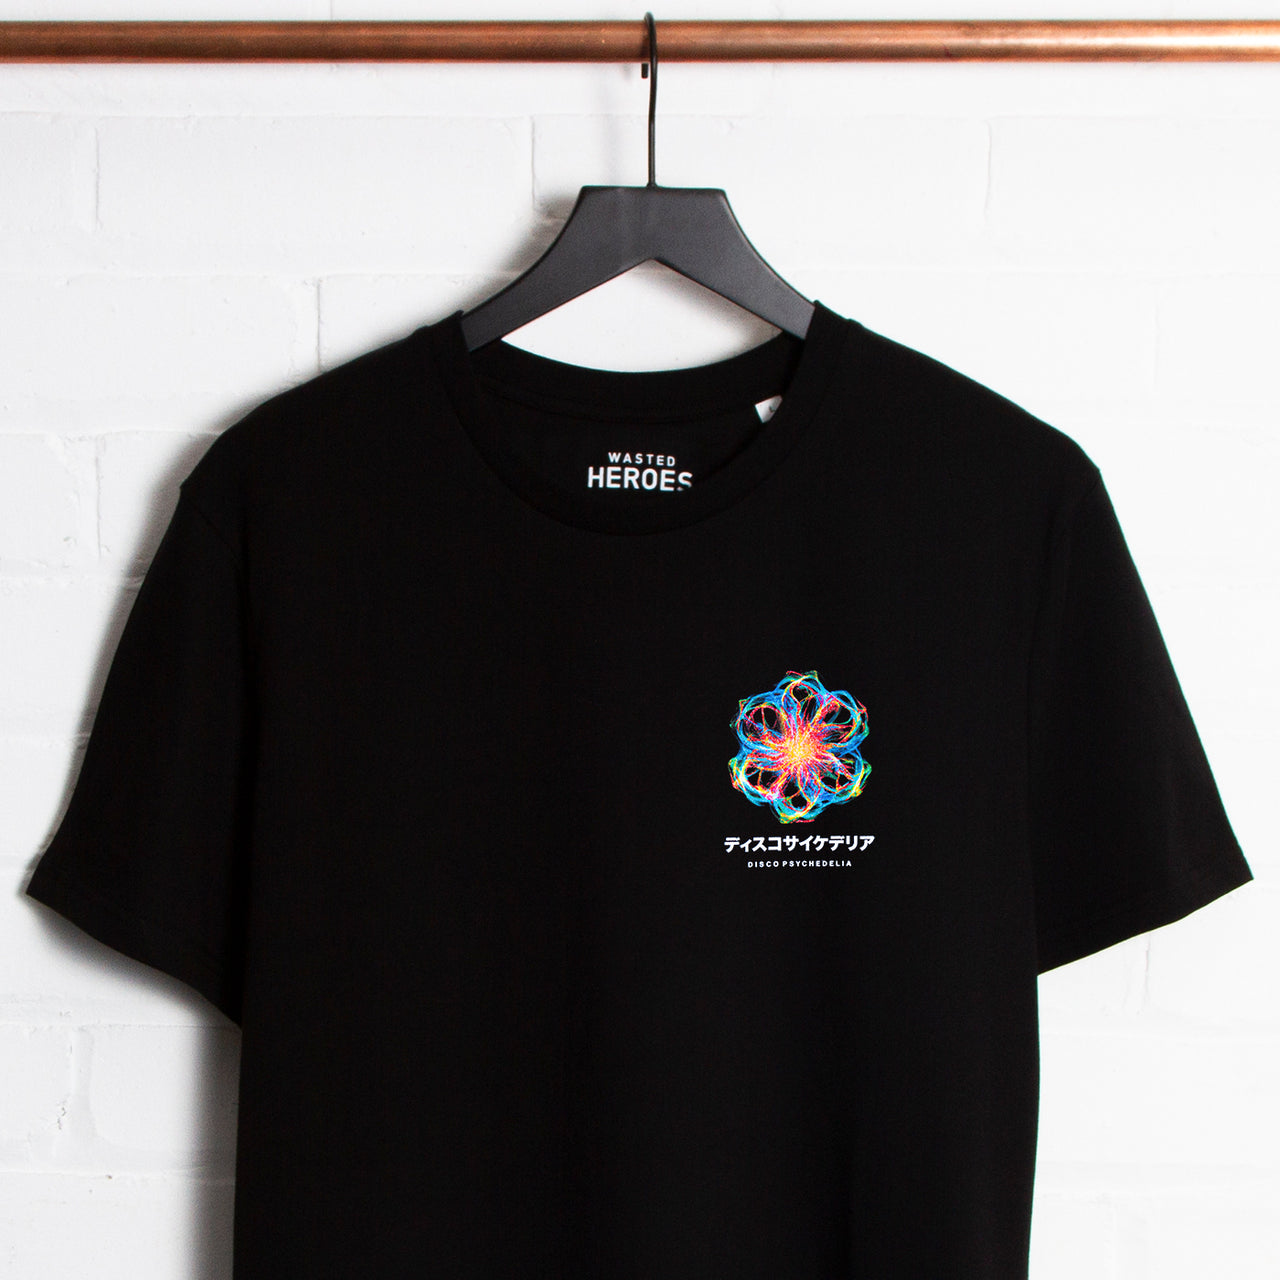 Crest Orb 016 - Tshirt - Black